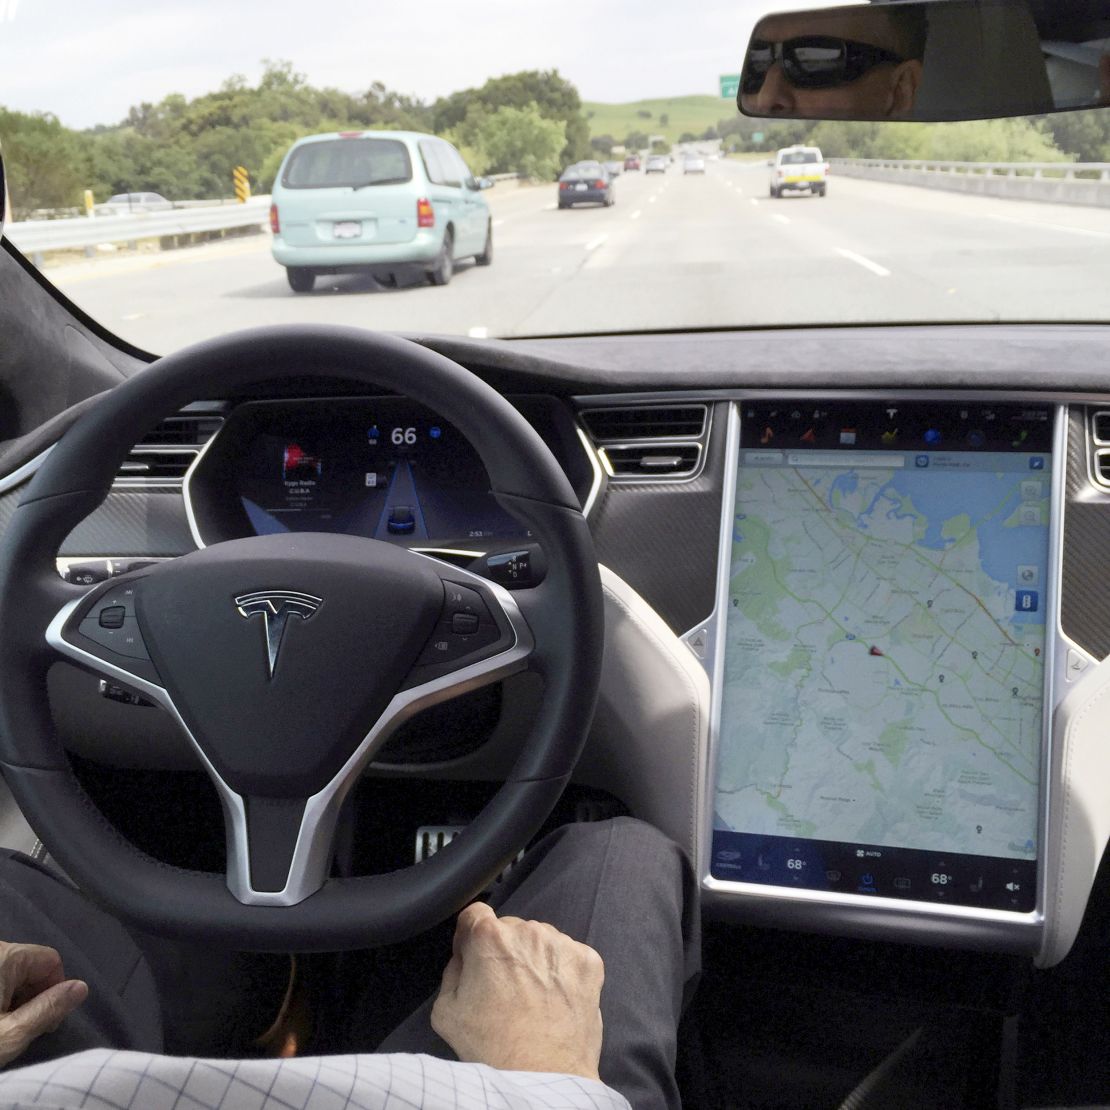 A Tesla Model S with Autopilot is shown.